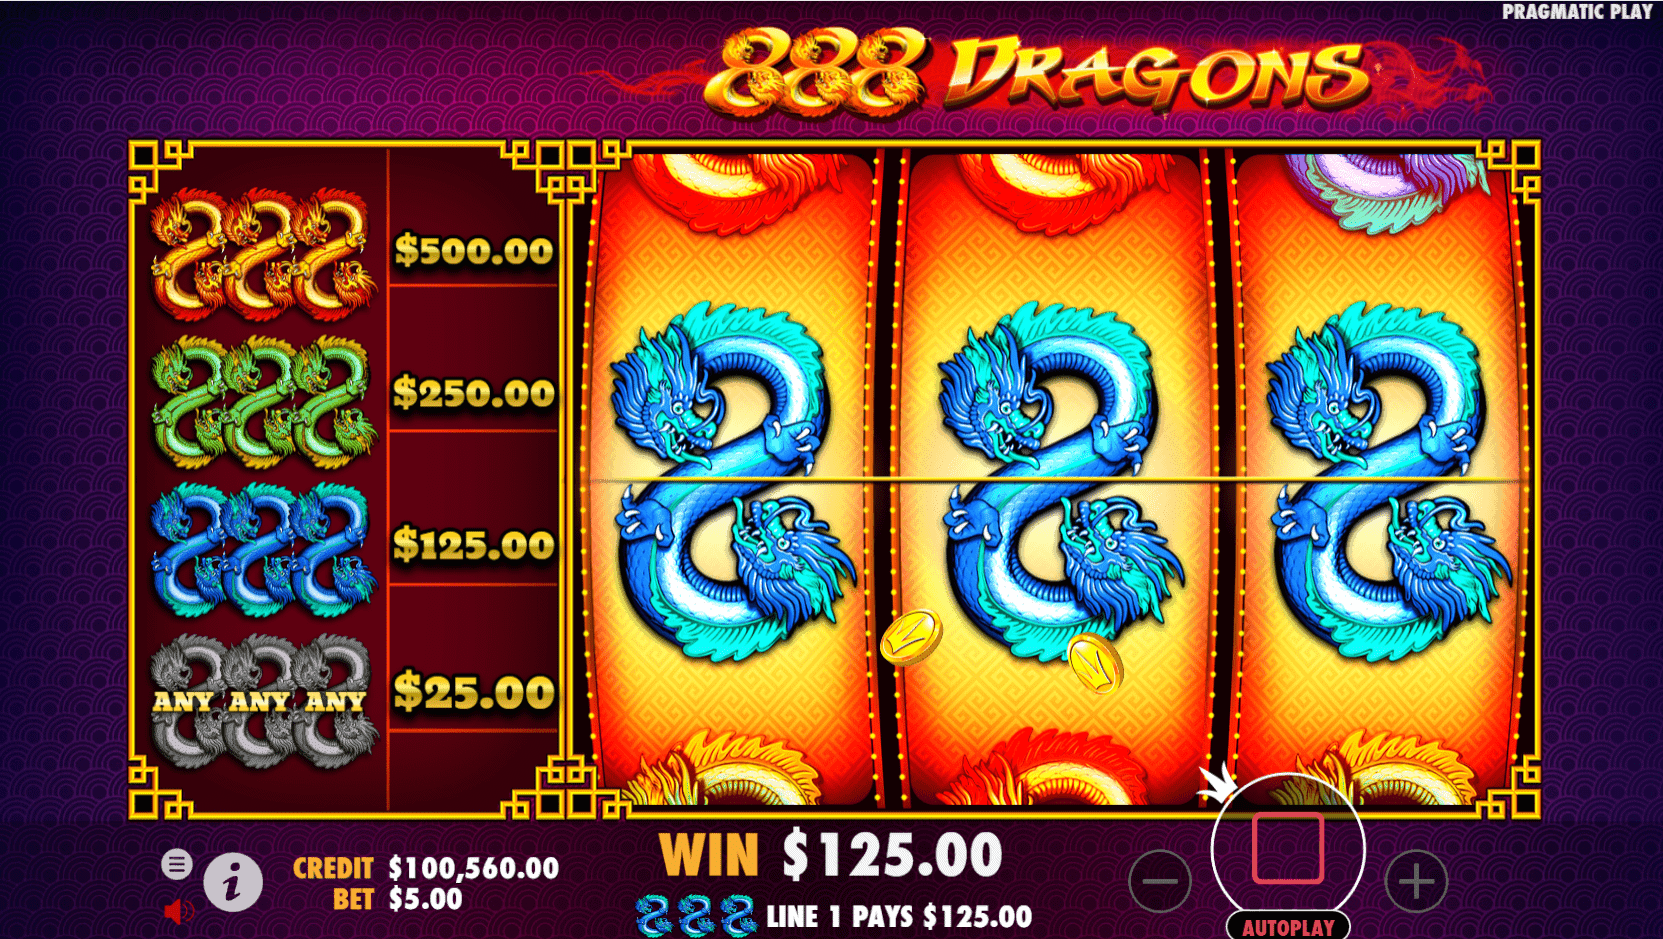 888 Dragons By Pragmatic Play